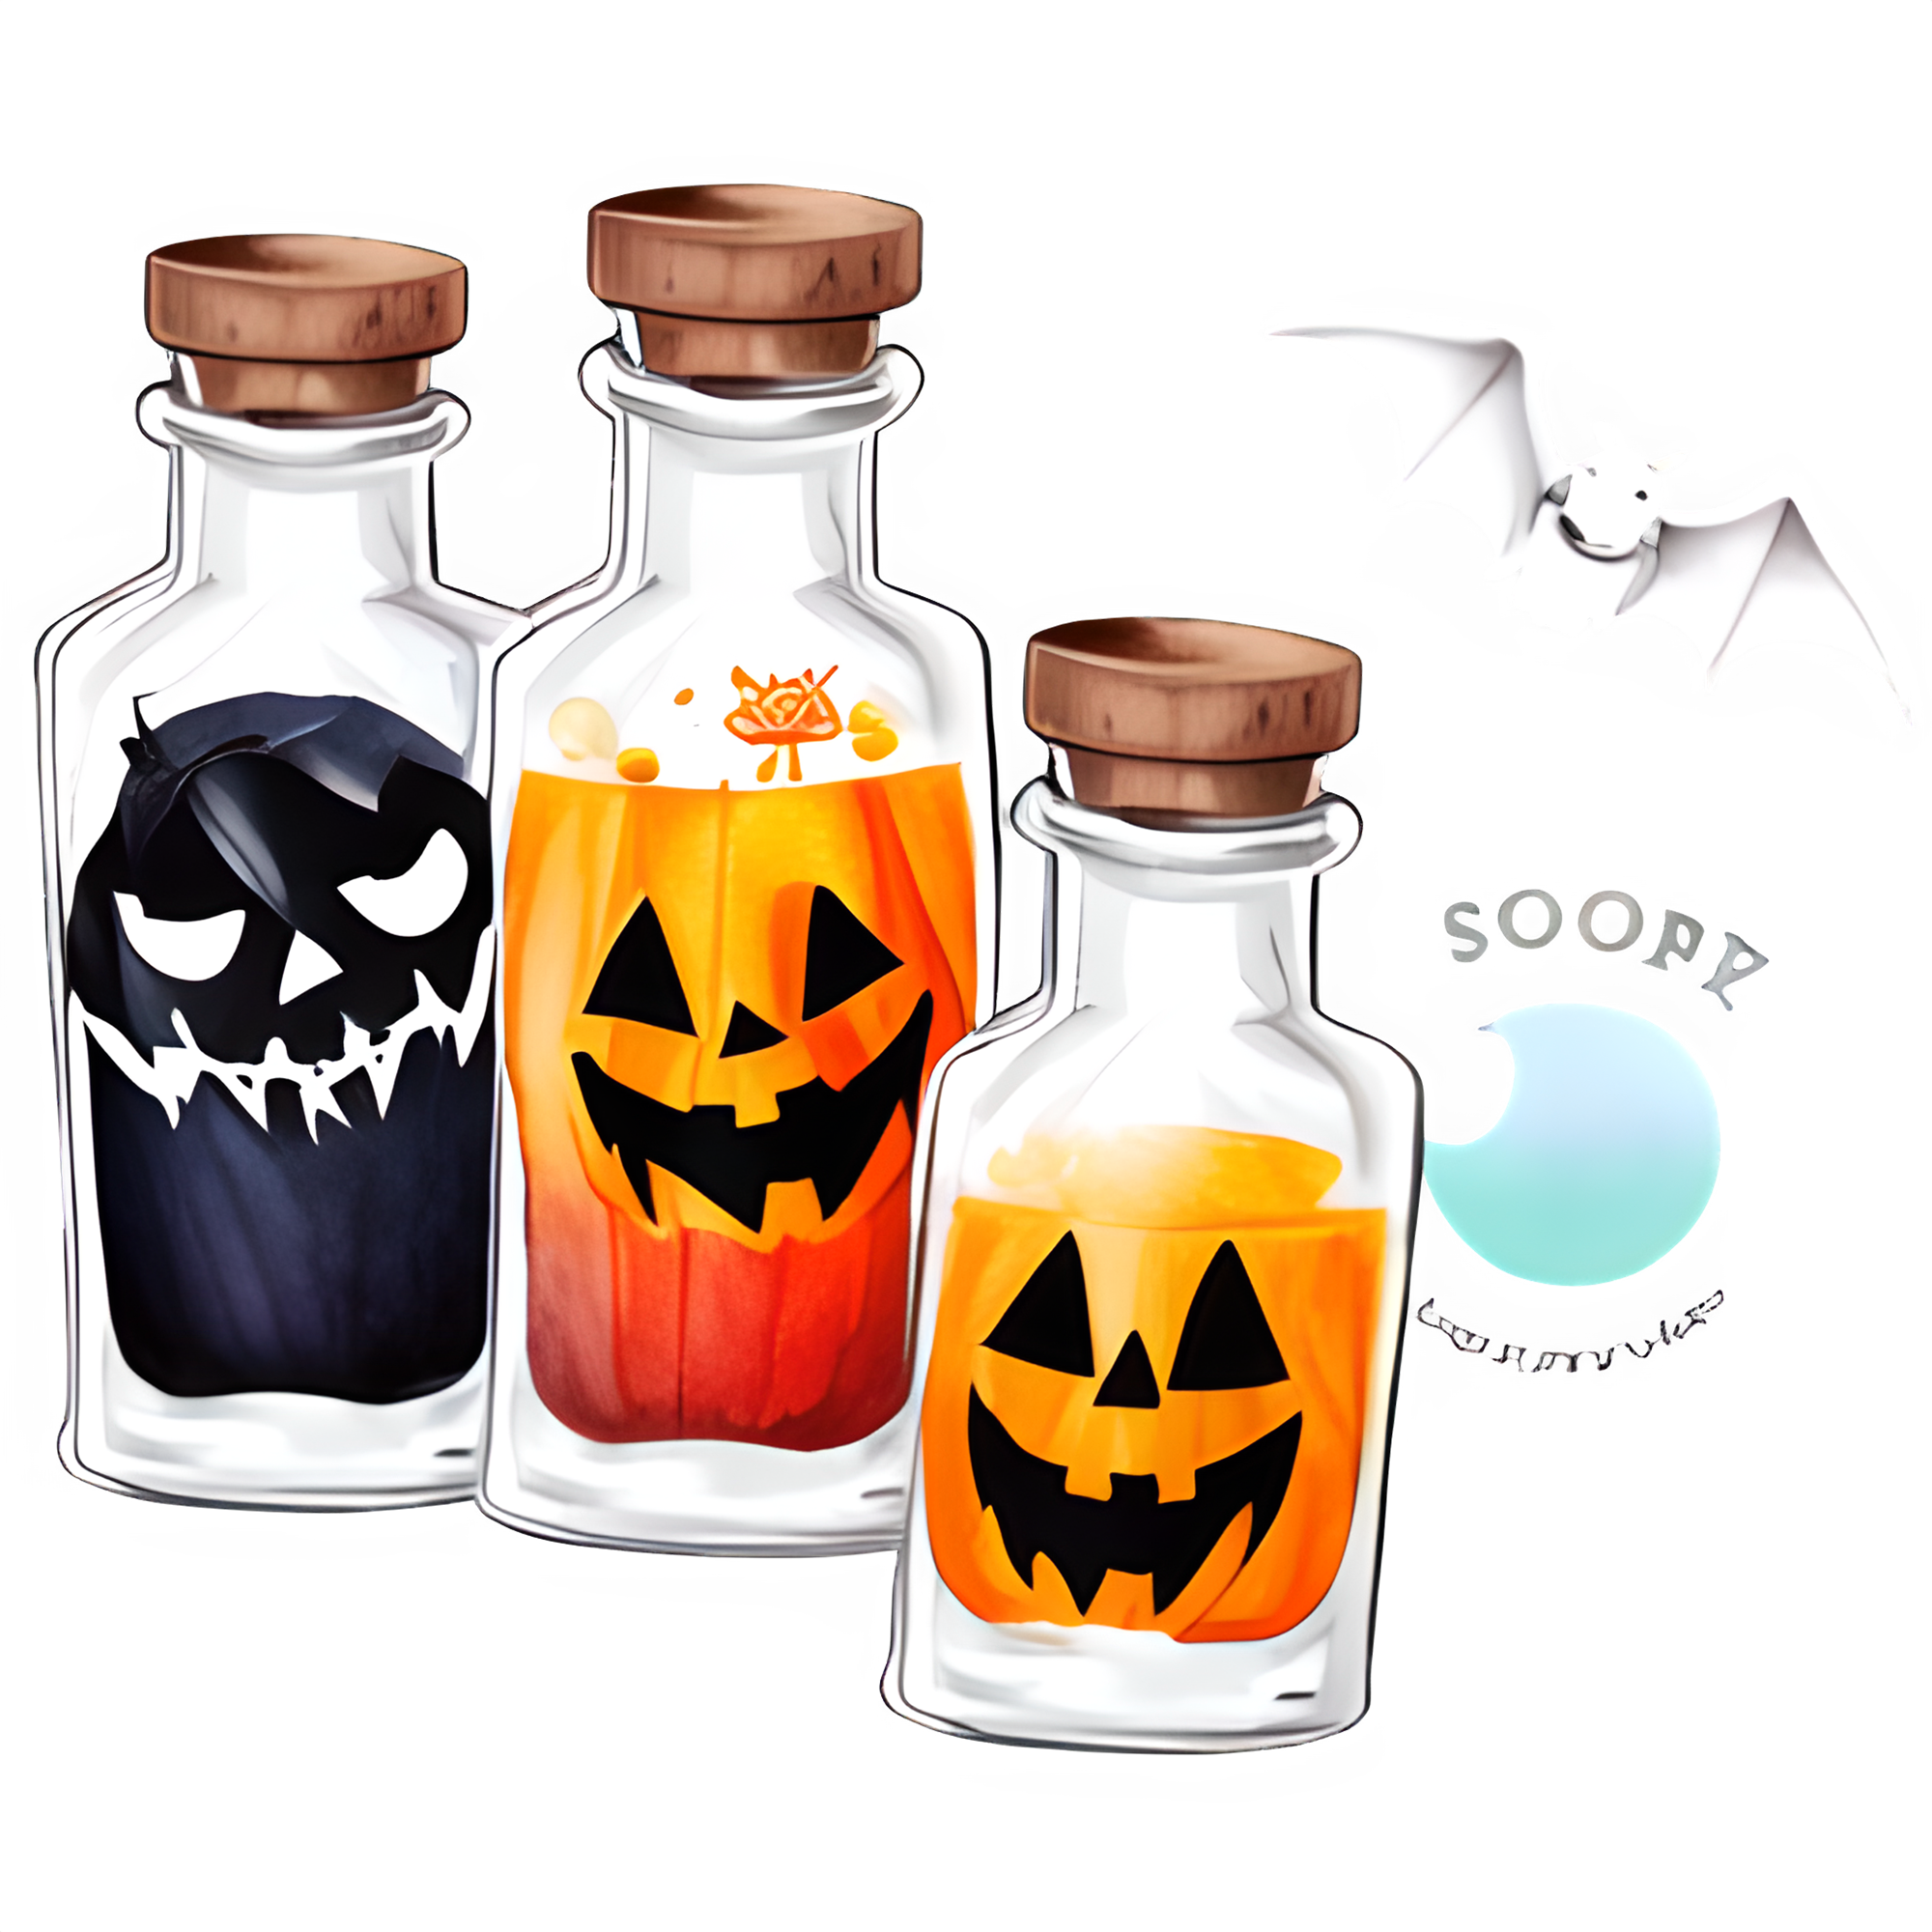 Halloween Poison Bottles Freebies